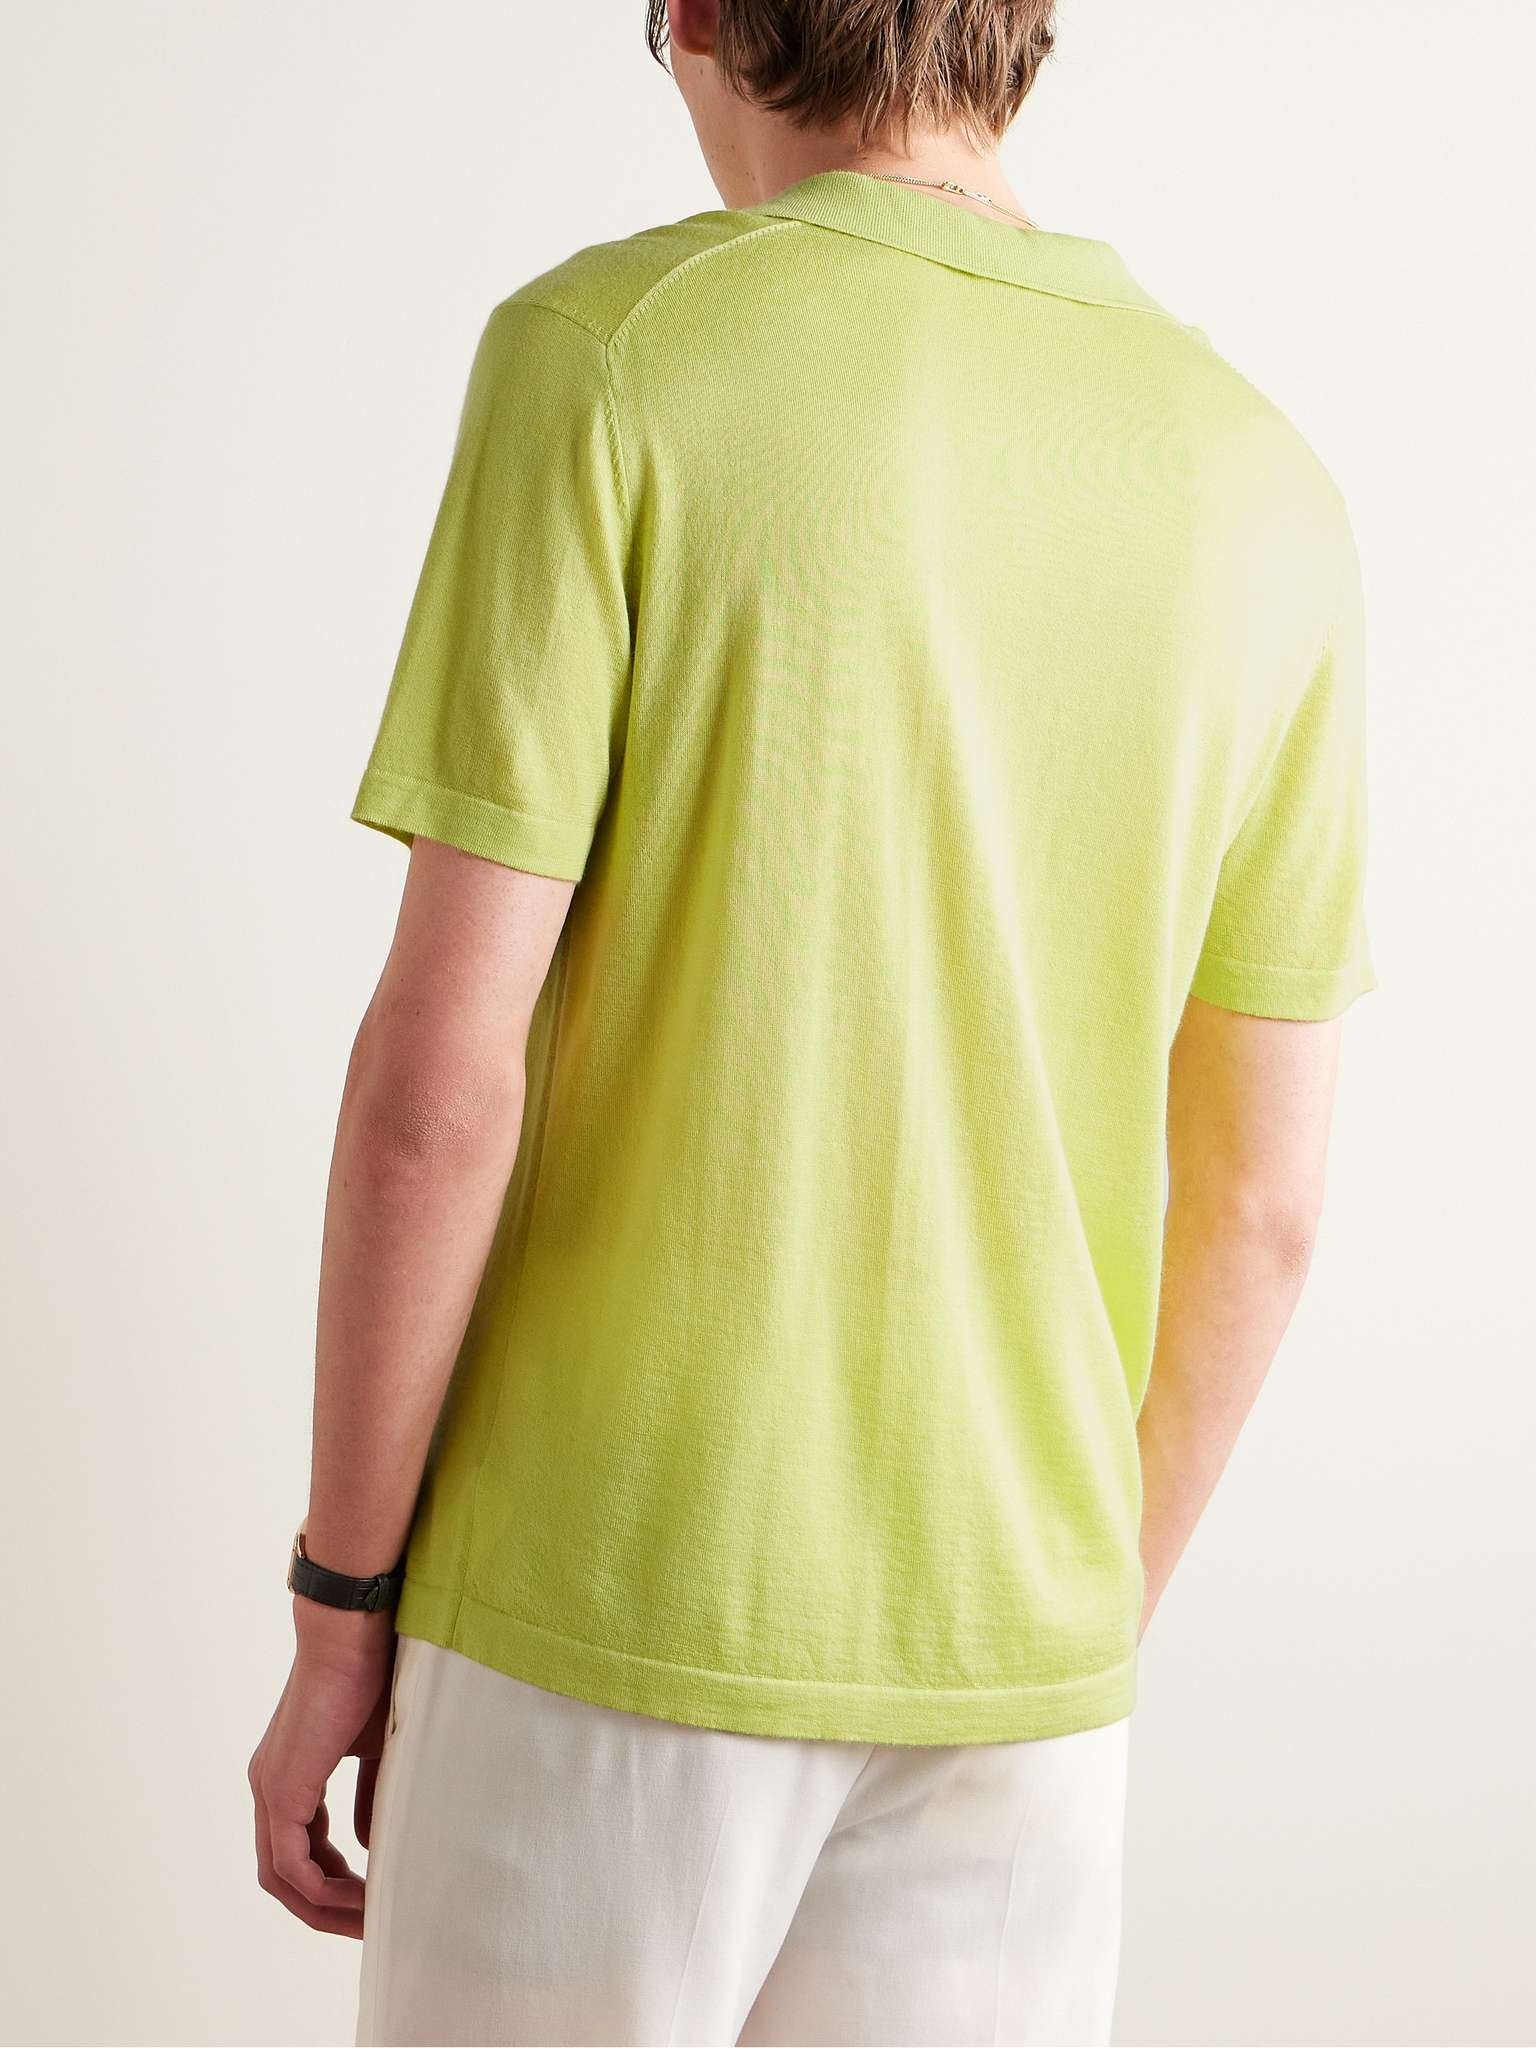 Stendhal Cashmere Polo Shirt - 3